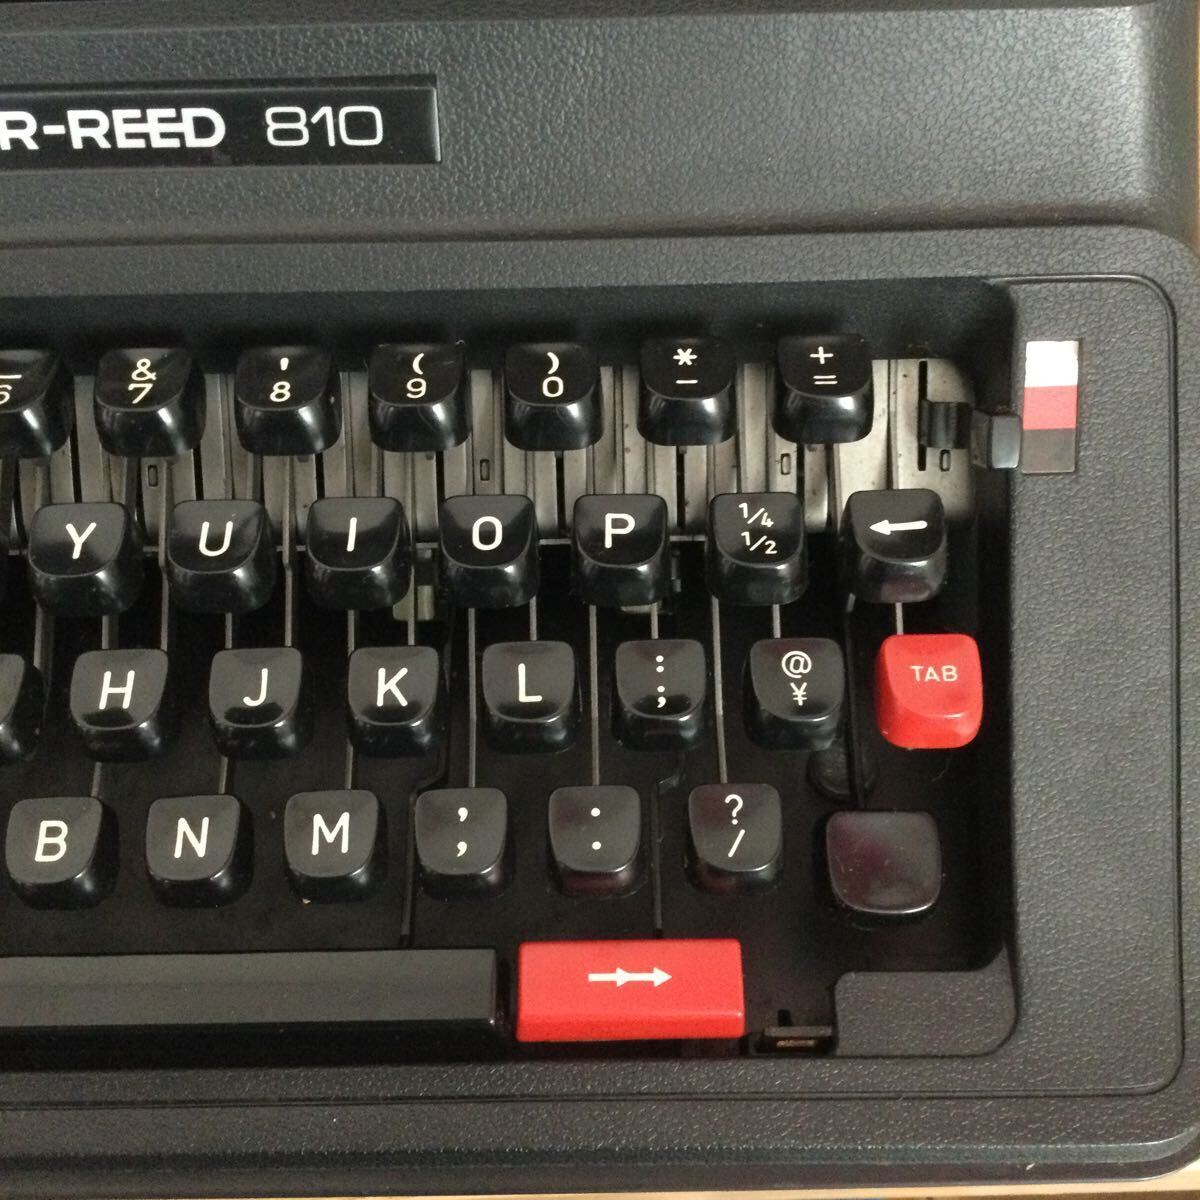  typewriter SILVER SEIKO LTD model 810 No.20181609 SILVER -REED 810 (RT)